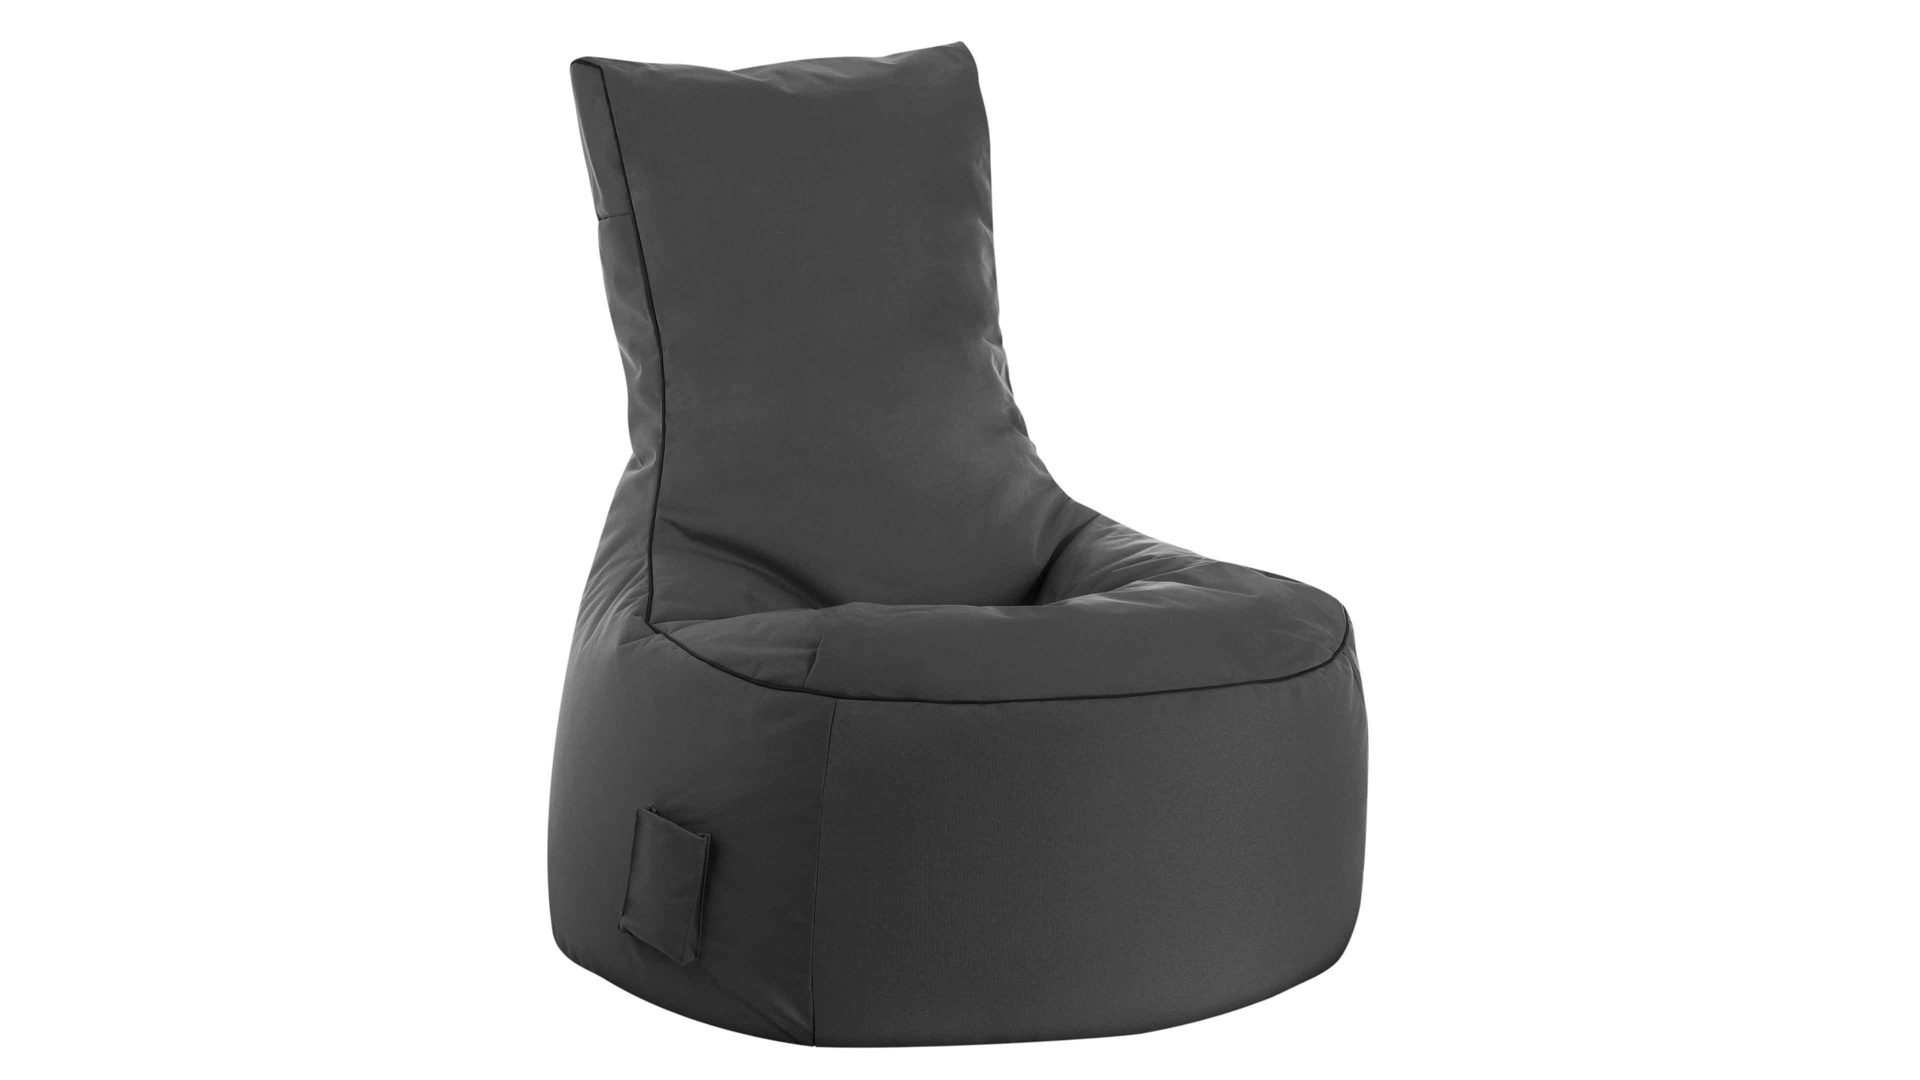 Sitzsack-Sessel Magma sitting point aus Kunstfaser in Anthrazit SITTING POINT Sitzsack-Sessel swing scuba® anthrazitfarbene Kunstfaser - ca. 95 x 90 x 65 cm